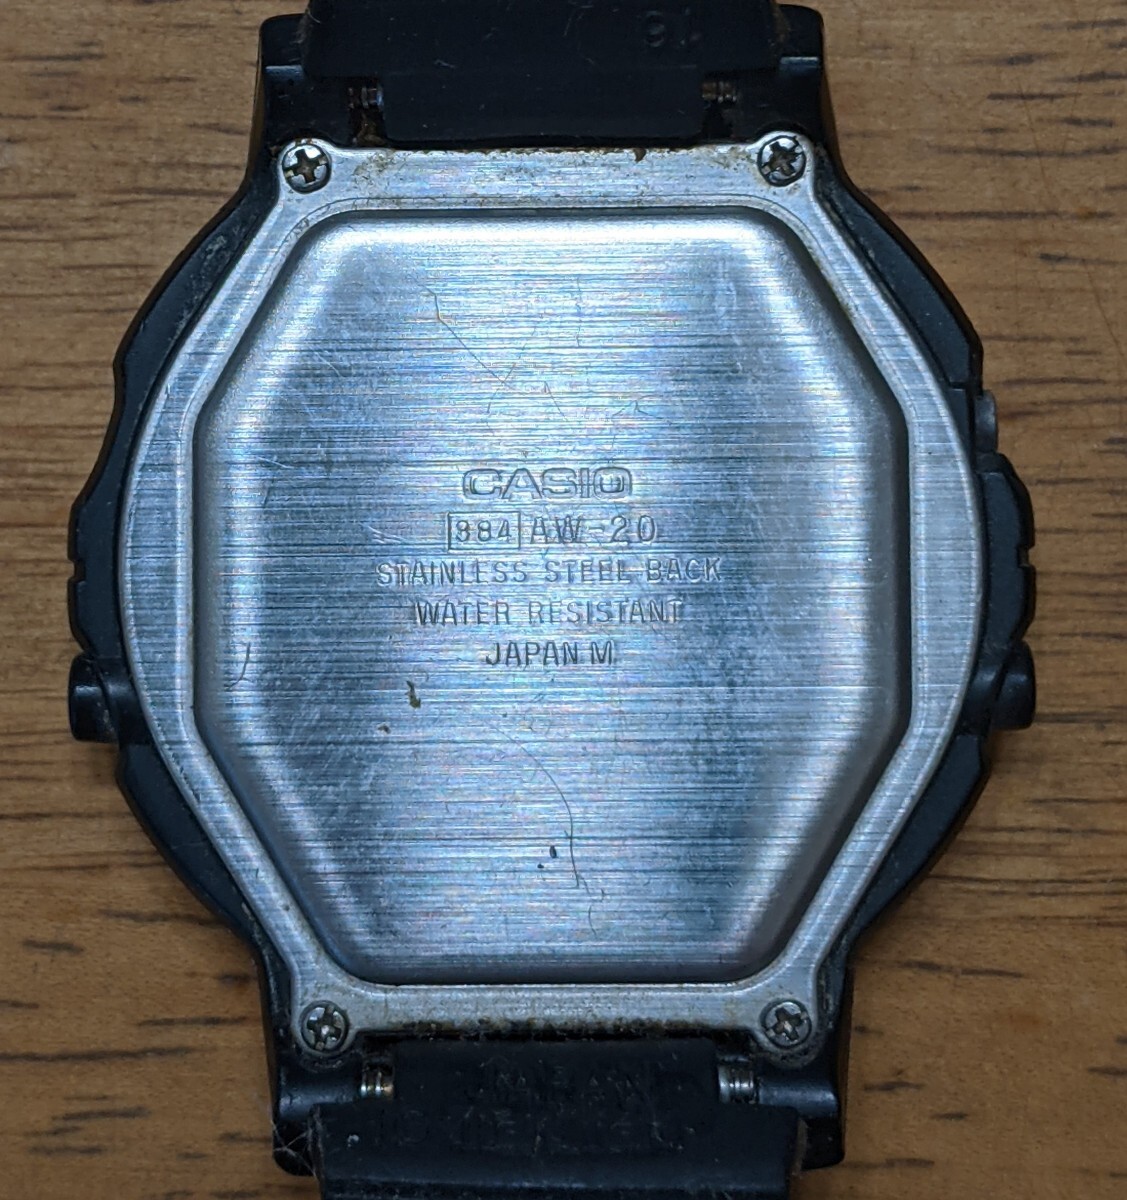 IY1629 CASIO AW-20 SPEED MEMORY デジタル腕時計/デジタルウォッチ/腕時計/メンズ/カシオ 動作未確認 現状品 JUNK 送料無料